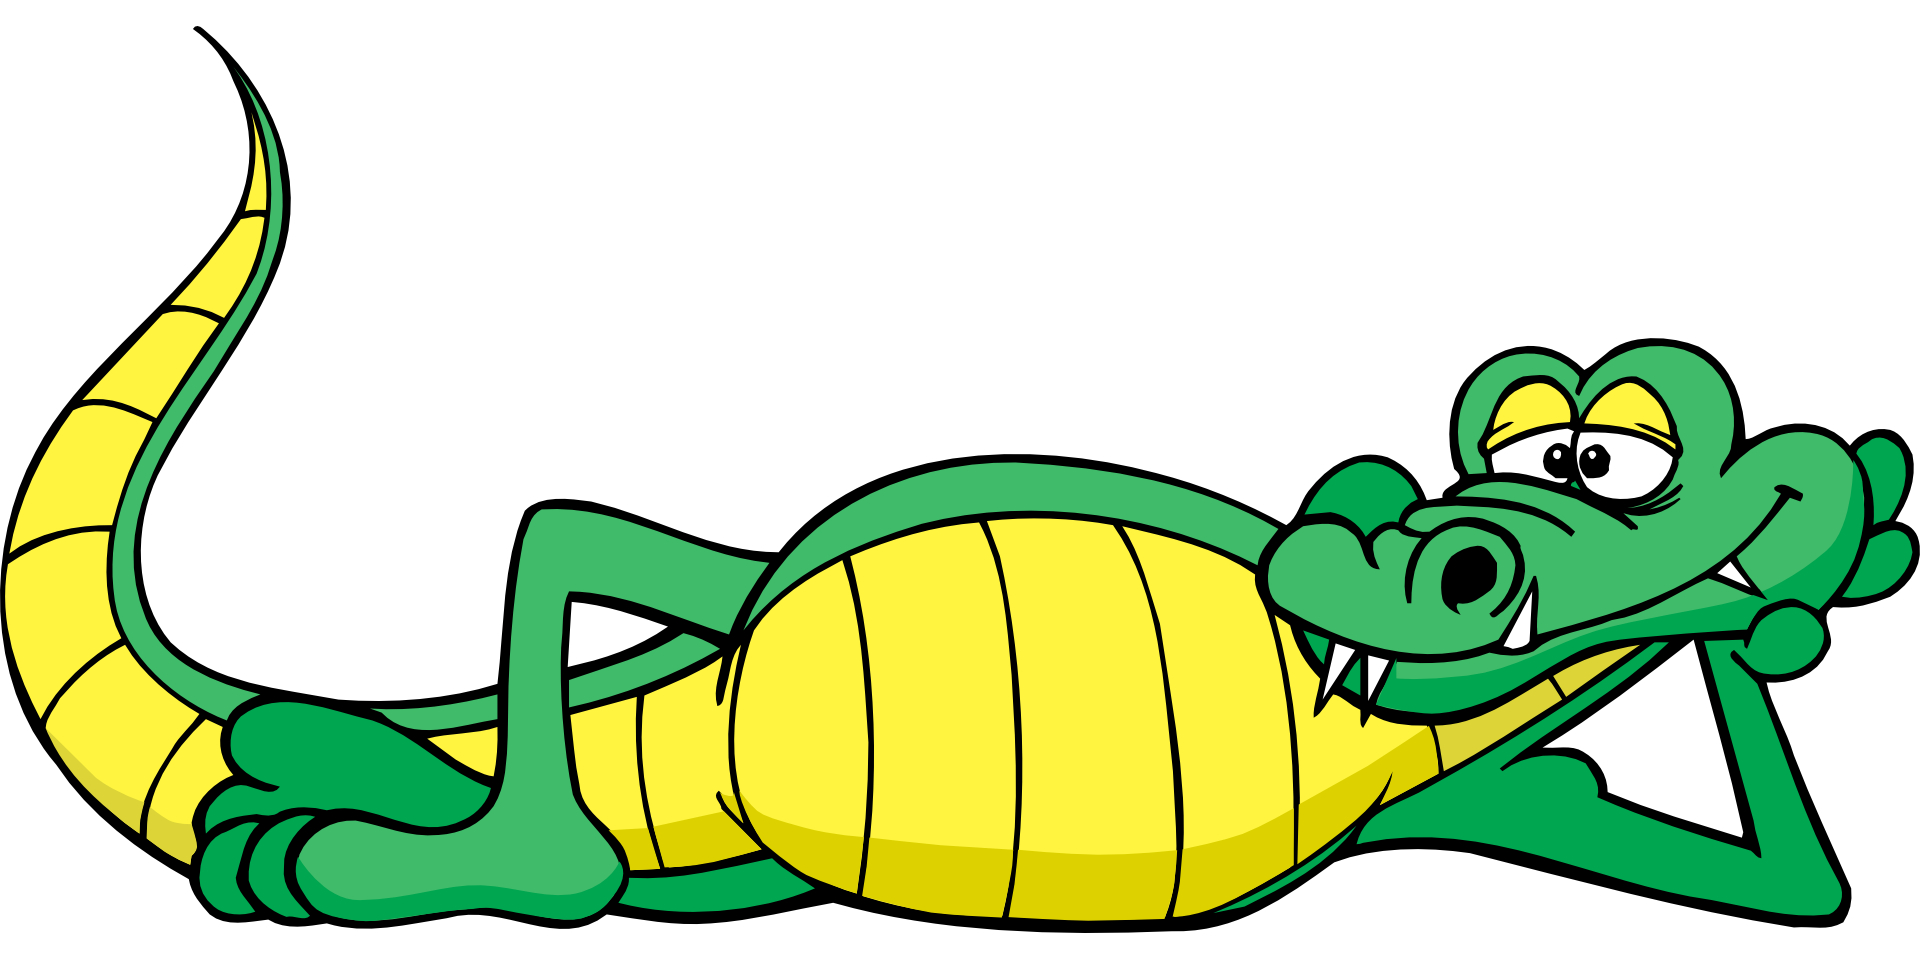 Cute cartoon animal,reclining alligator vector